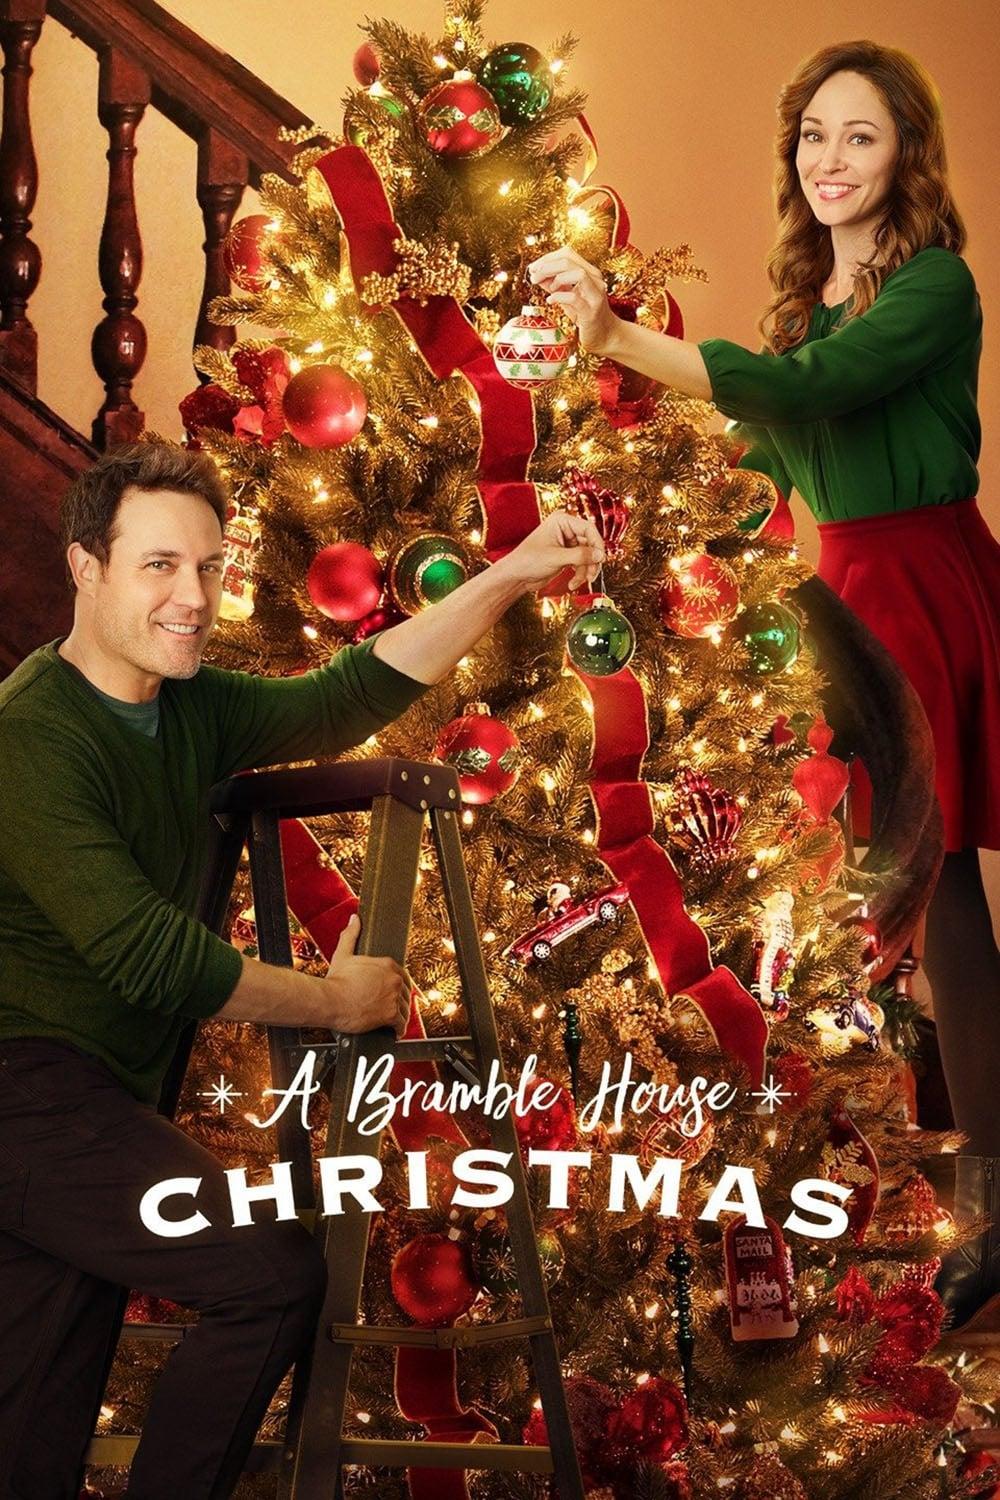 A Bramble House Christmas poster